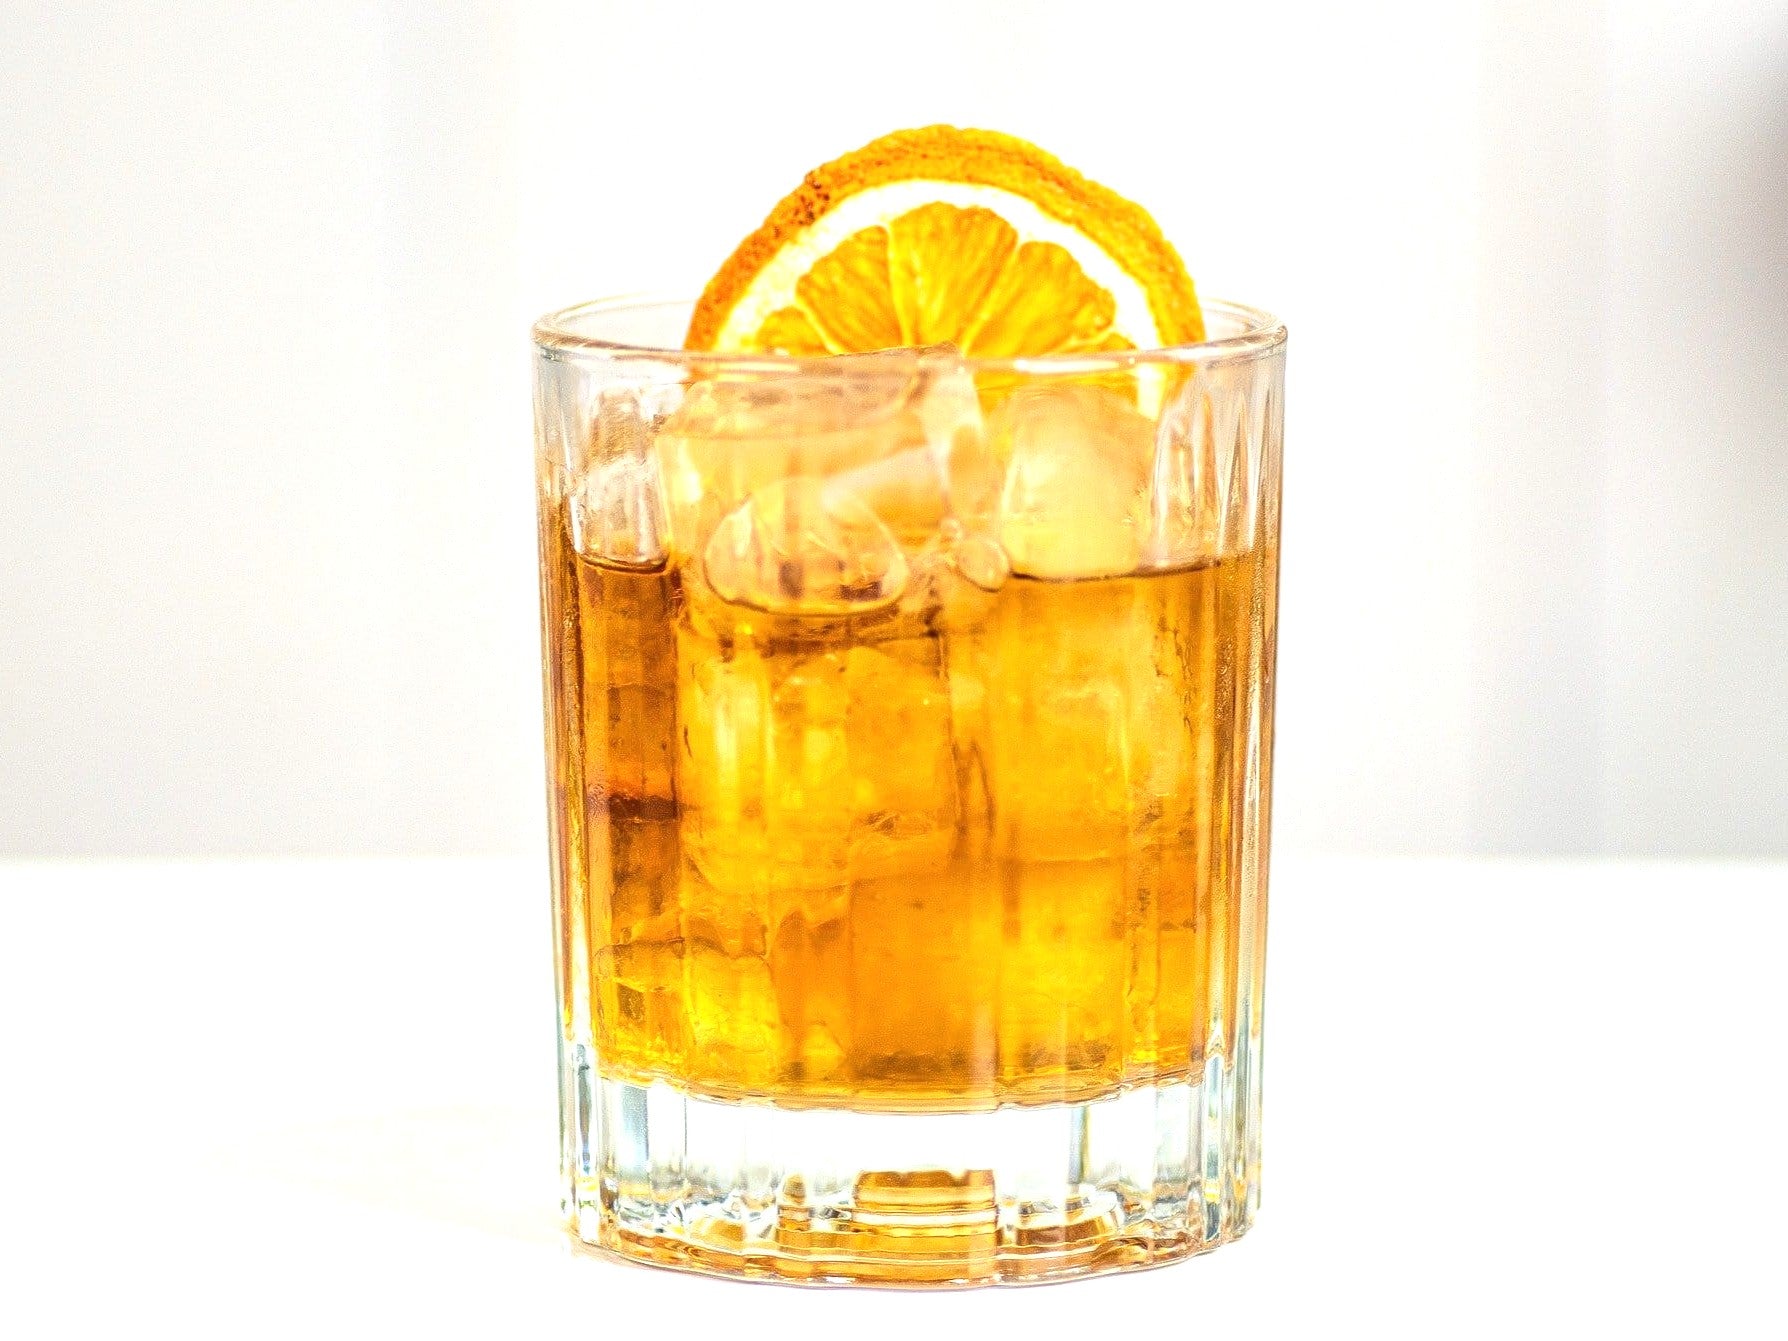  Zitruspresse Rezepte WHISKY SOUR Lynchburg Lemonade mit Whiskey, Zitronen und Rosmarin